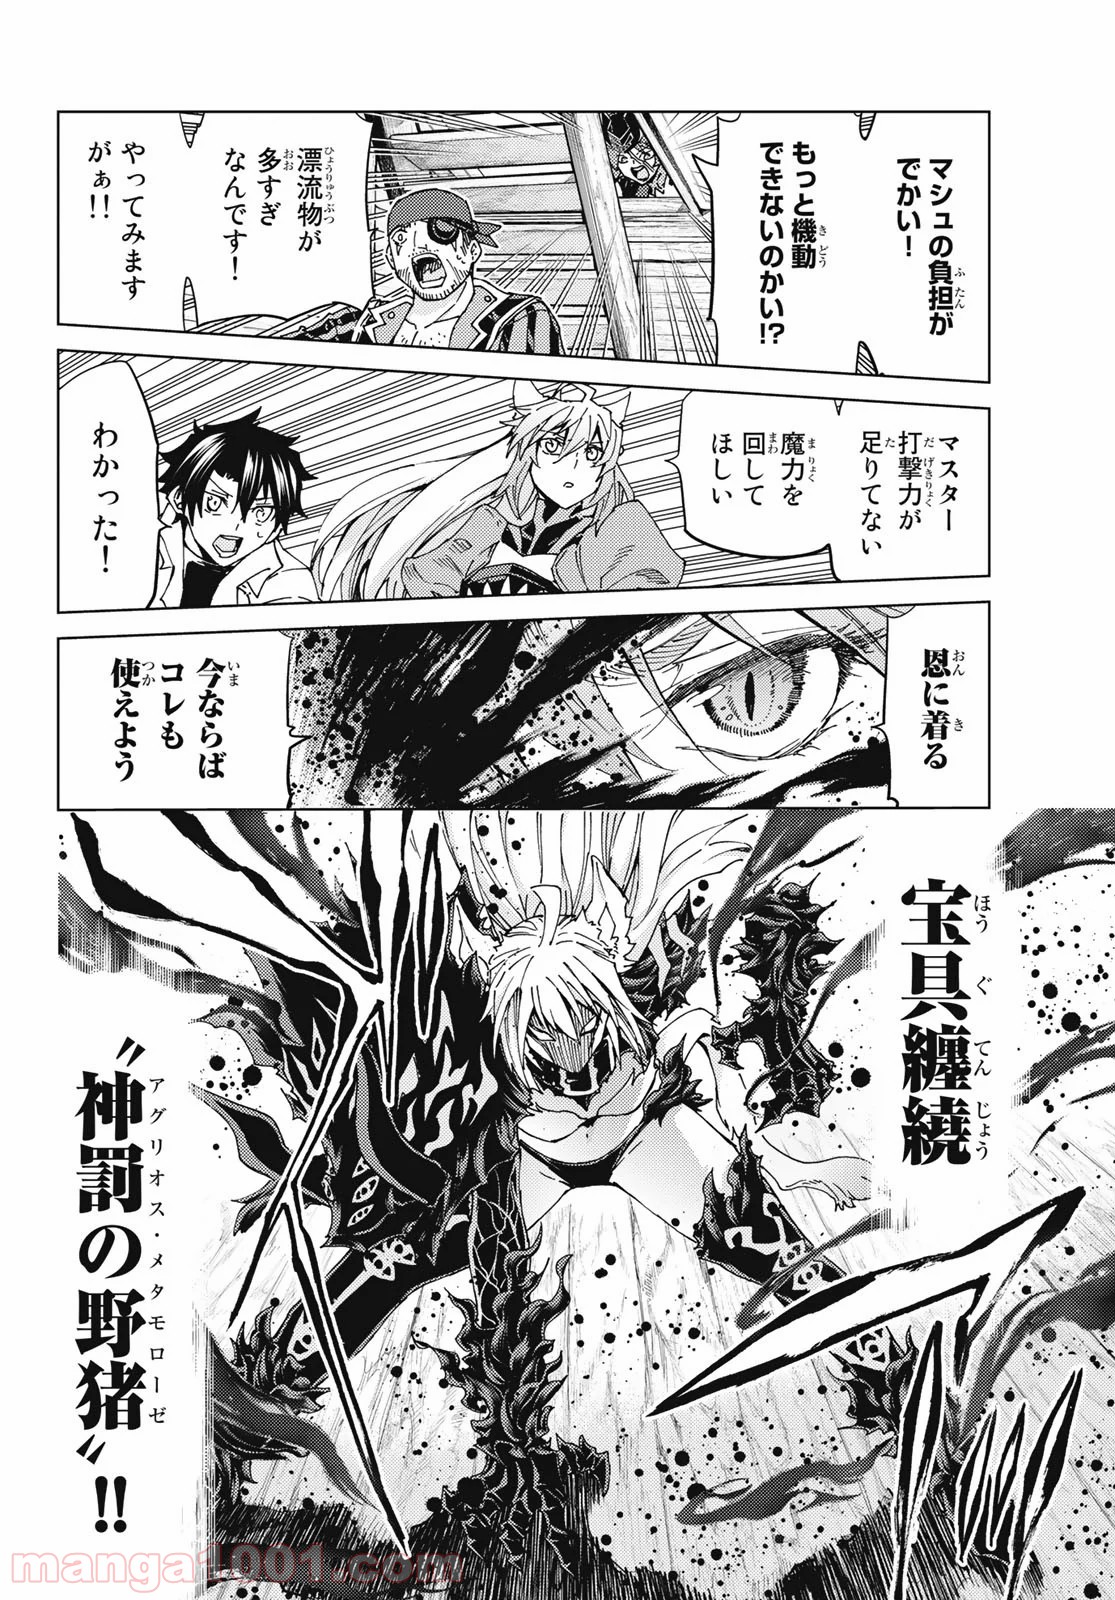 Fate Grand Order Turas Realta Raw 第33話 Manga Raw